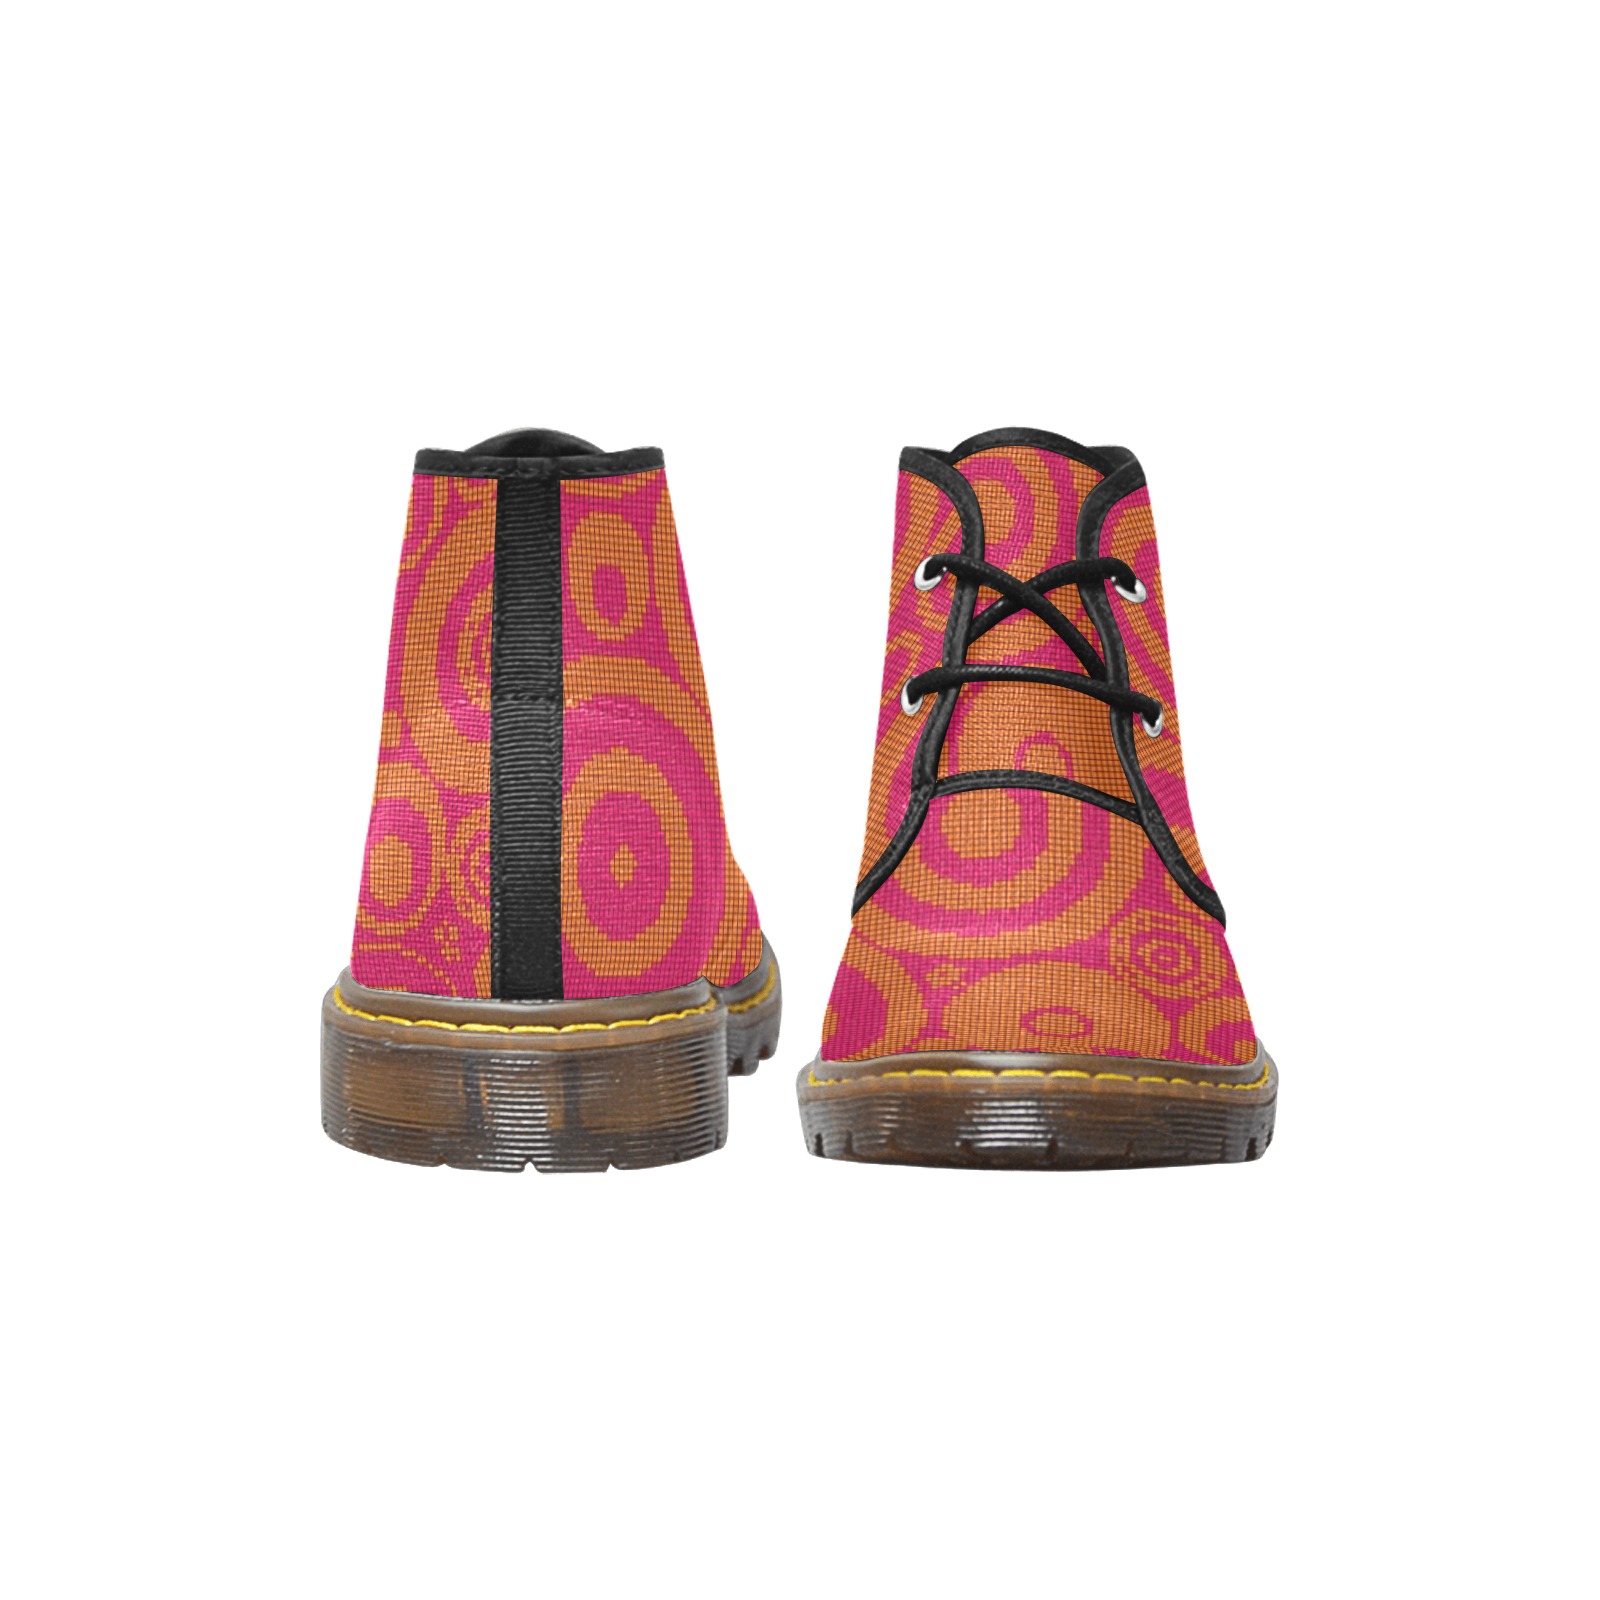 CIRCLING 2 Women's Canvas Chukka Boots (Model 2402-1)